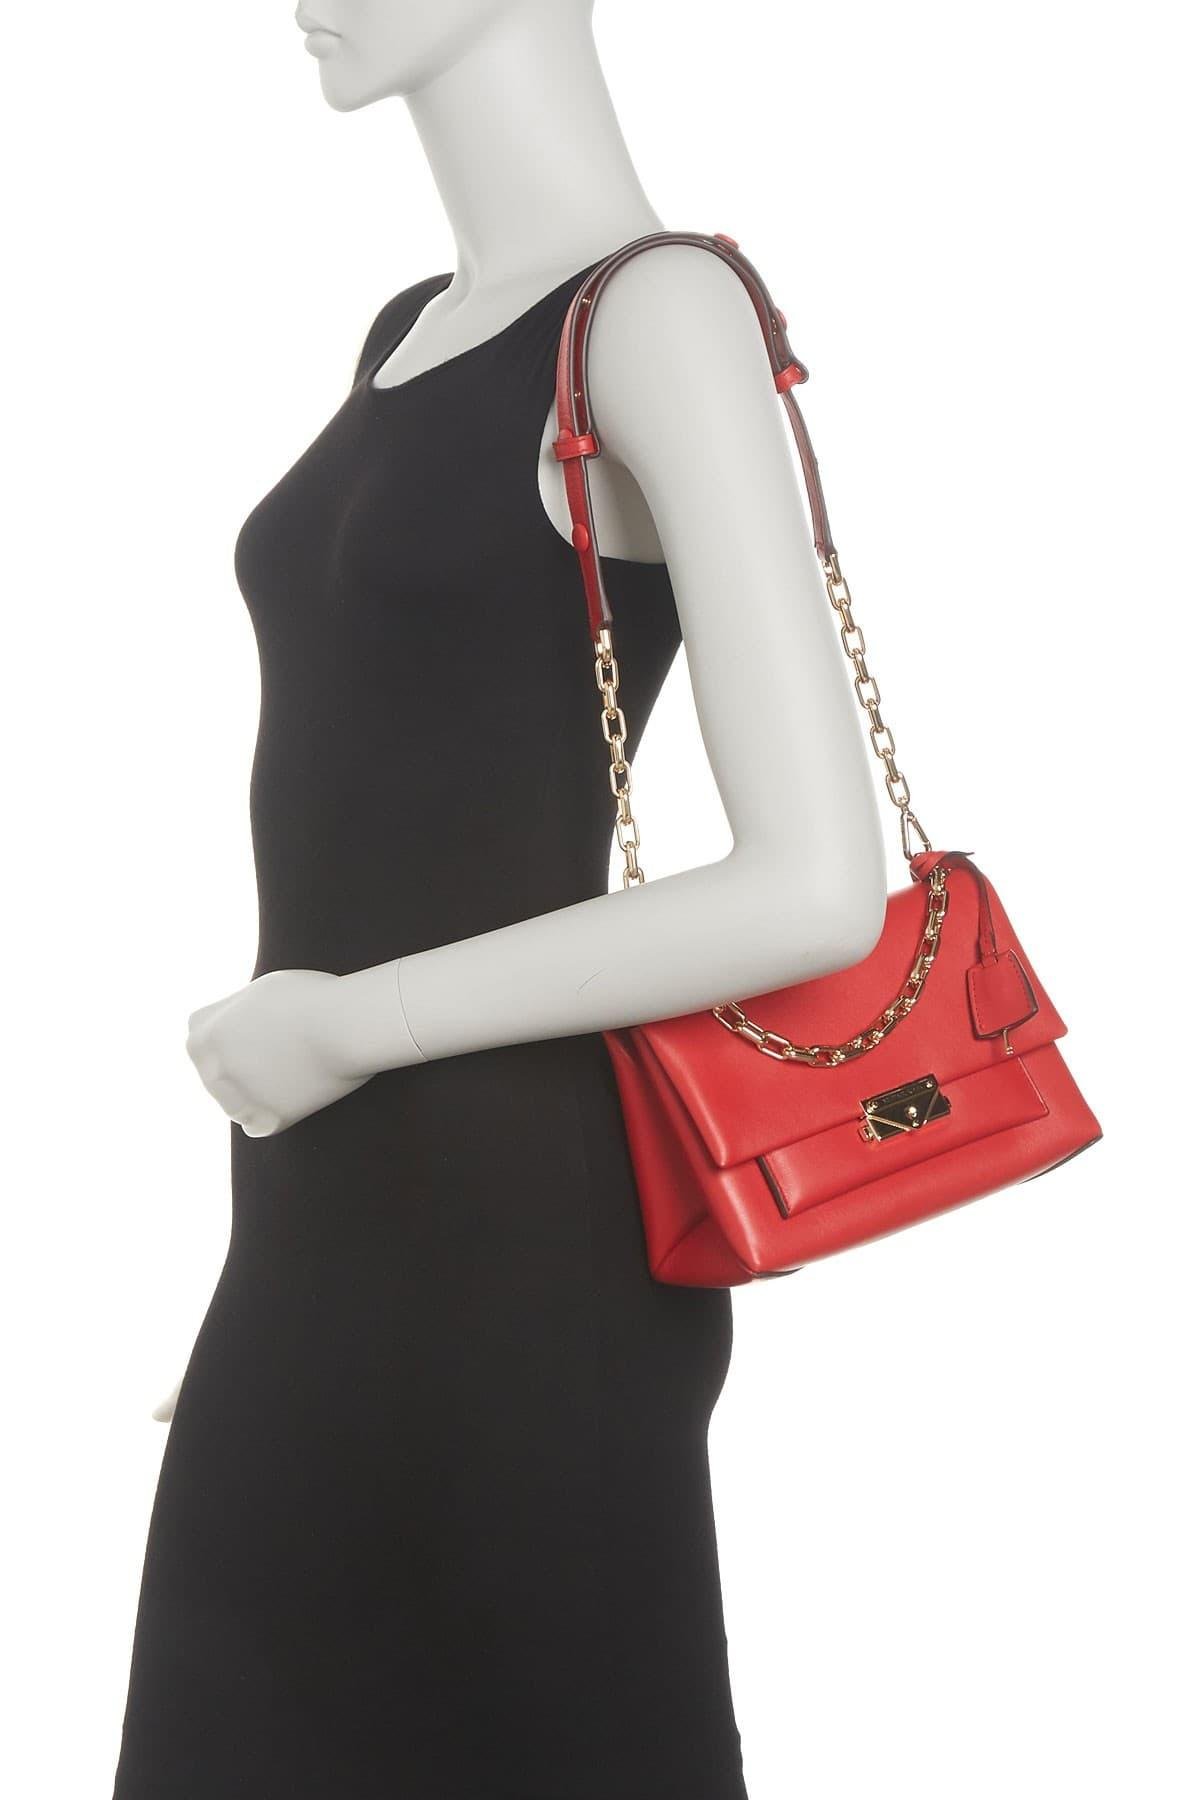 Michael Kors Cece Mini Quilted Leather Crossbody Bag - Red 32T9G0EC1L-683  192877806288 - Handbags, Cece - Jomashop